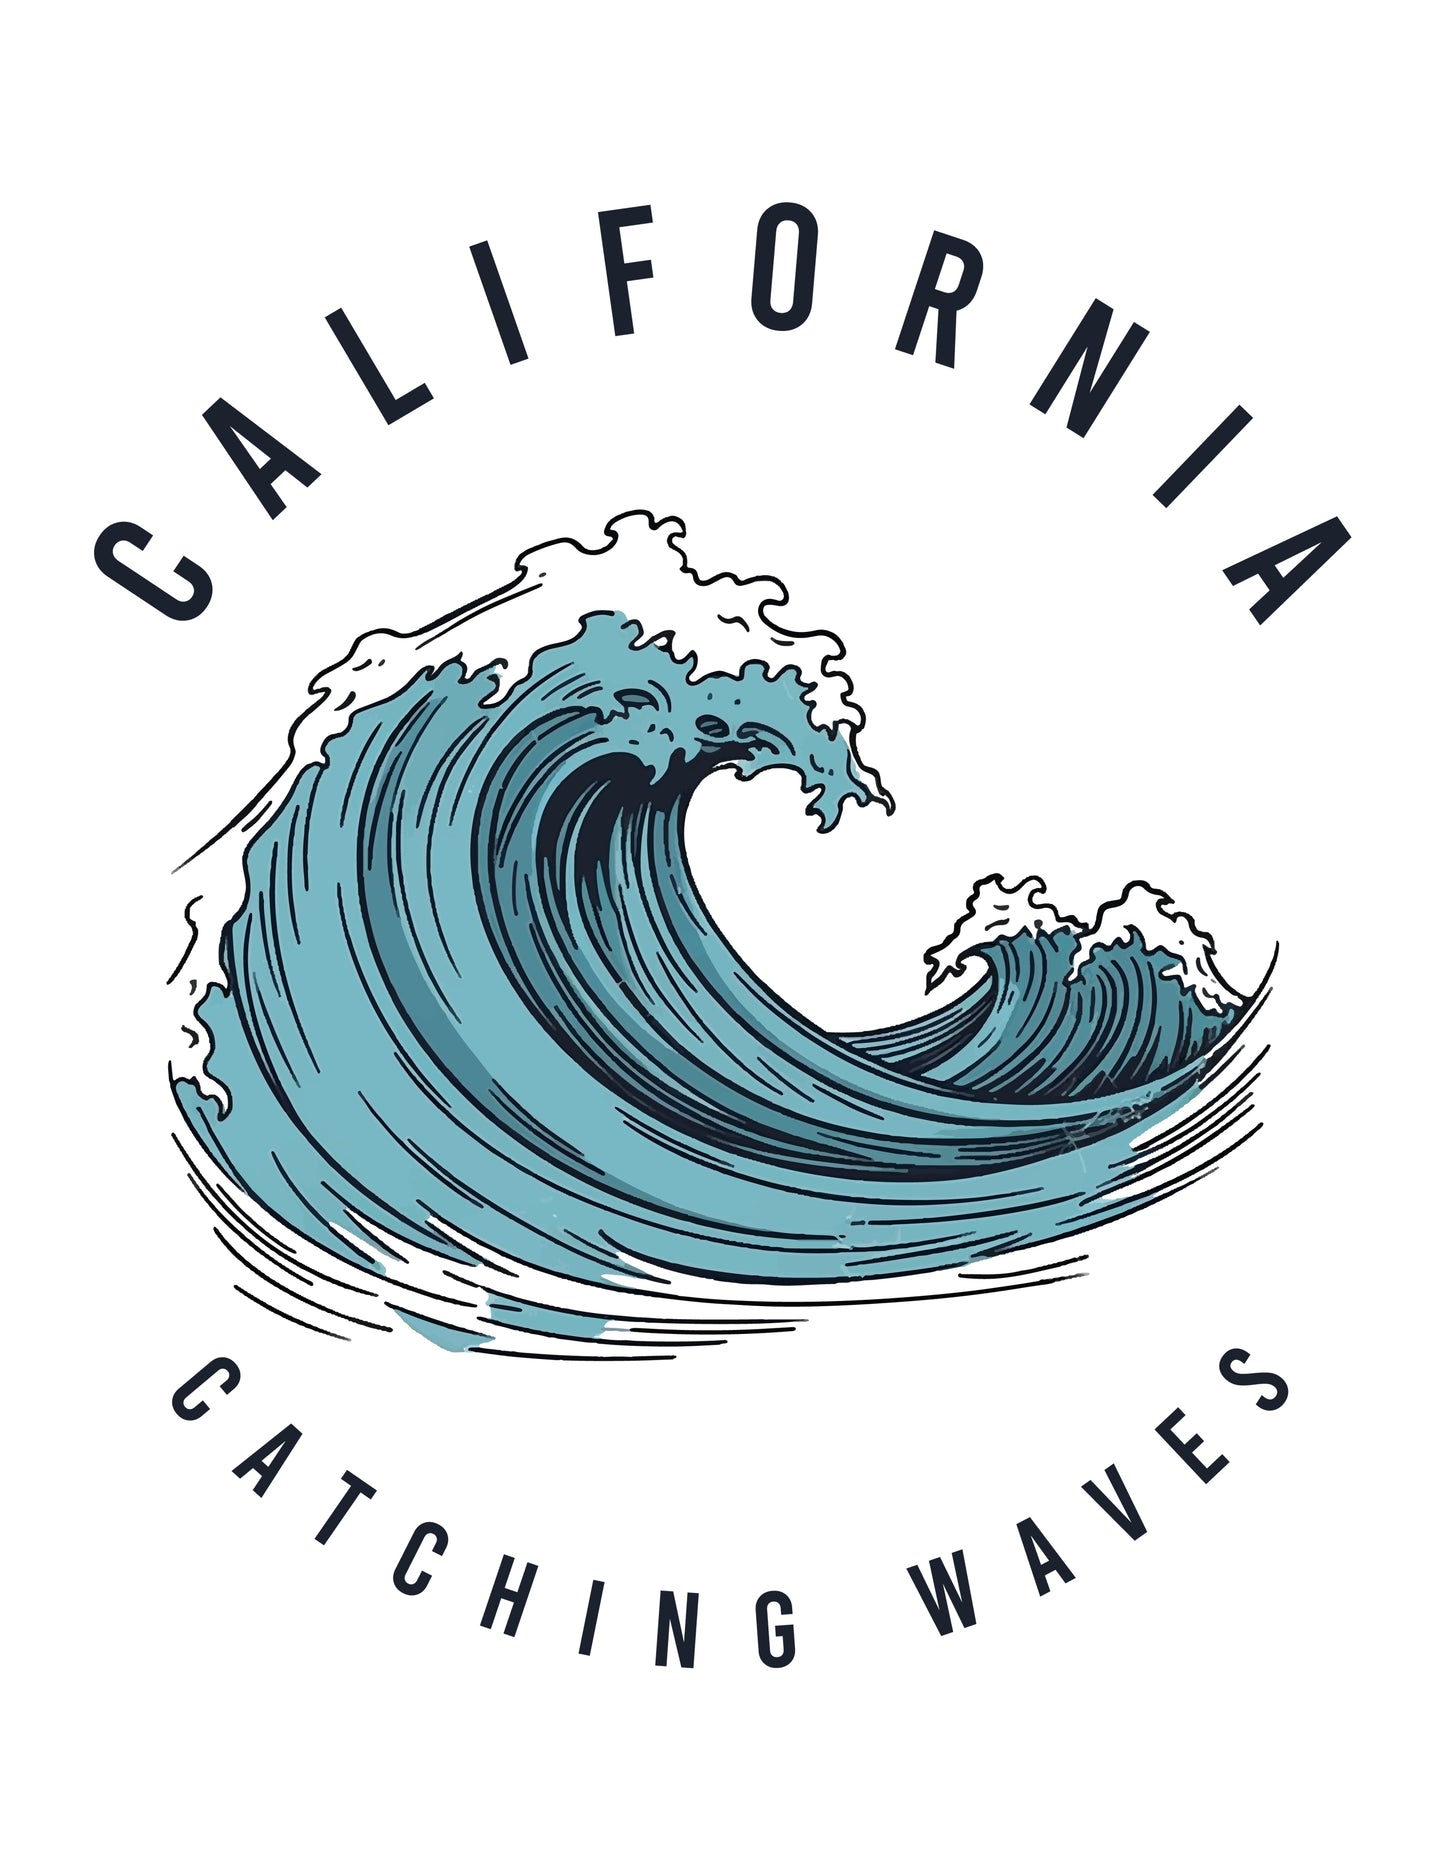 California Catching Waves